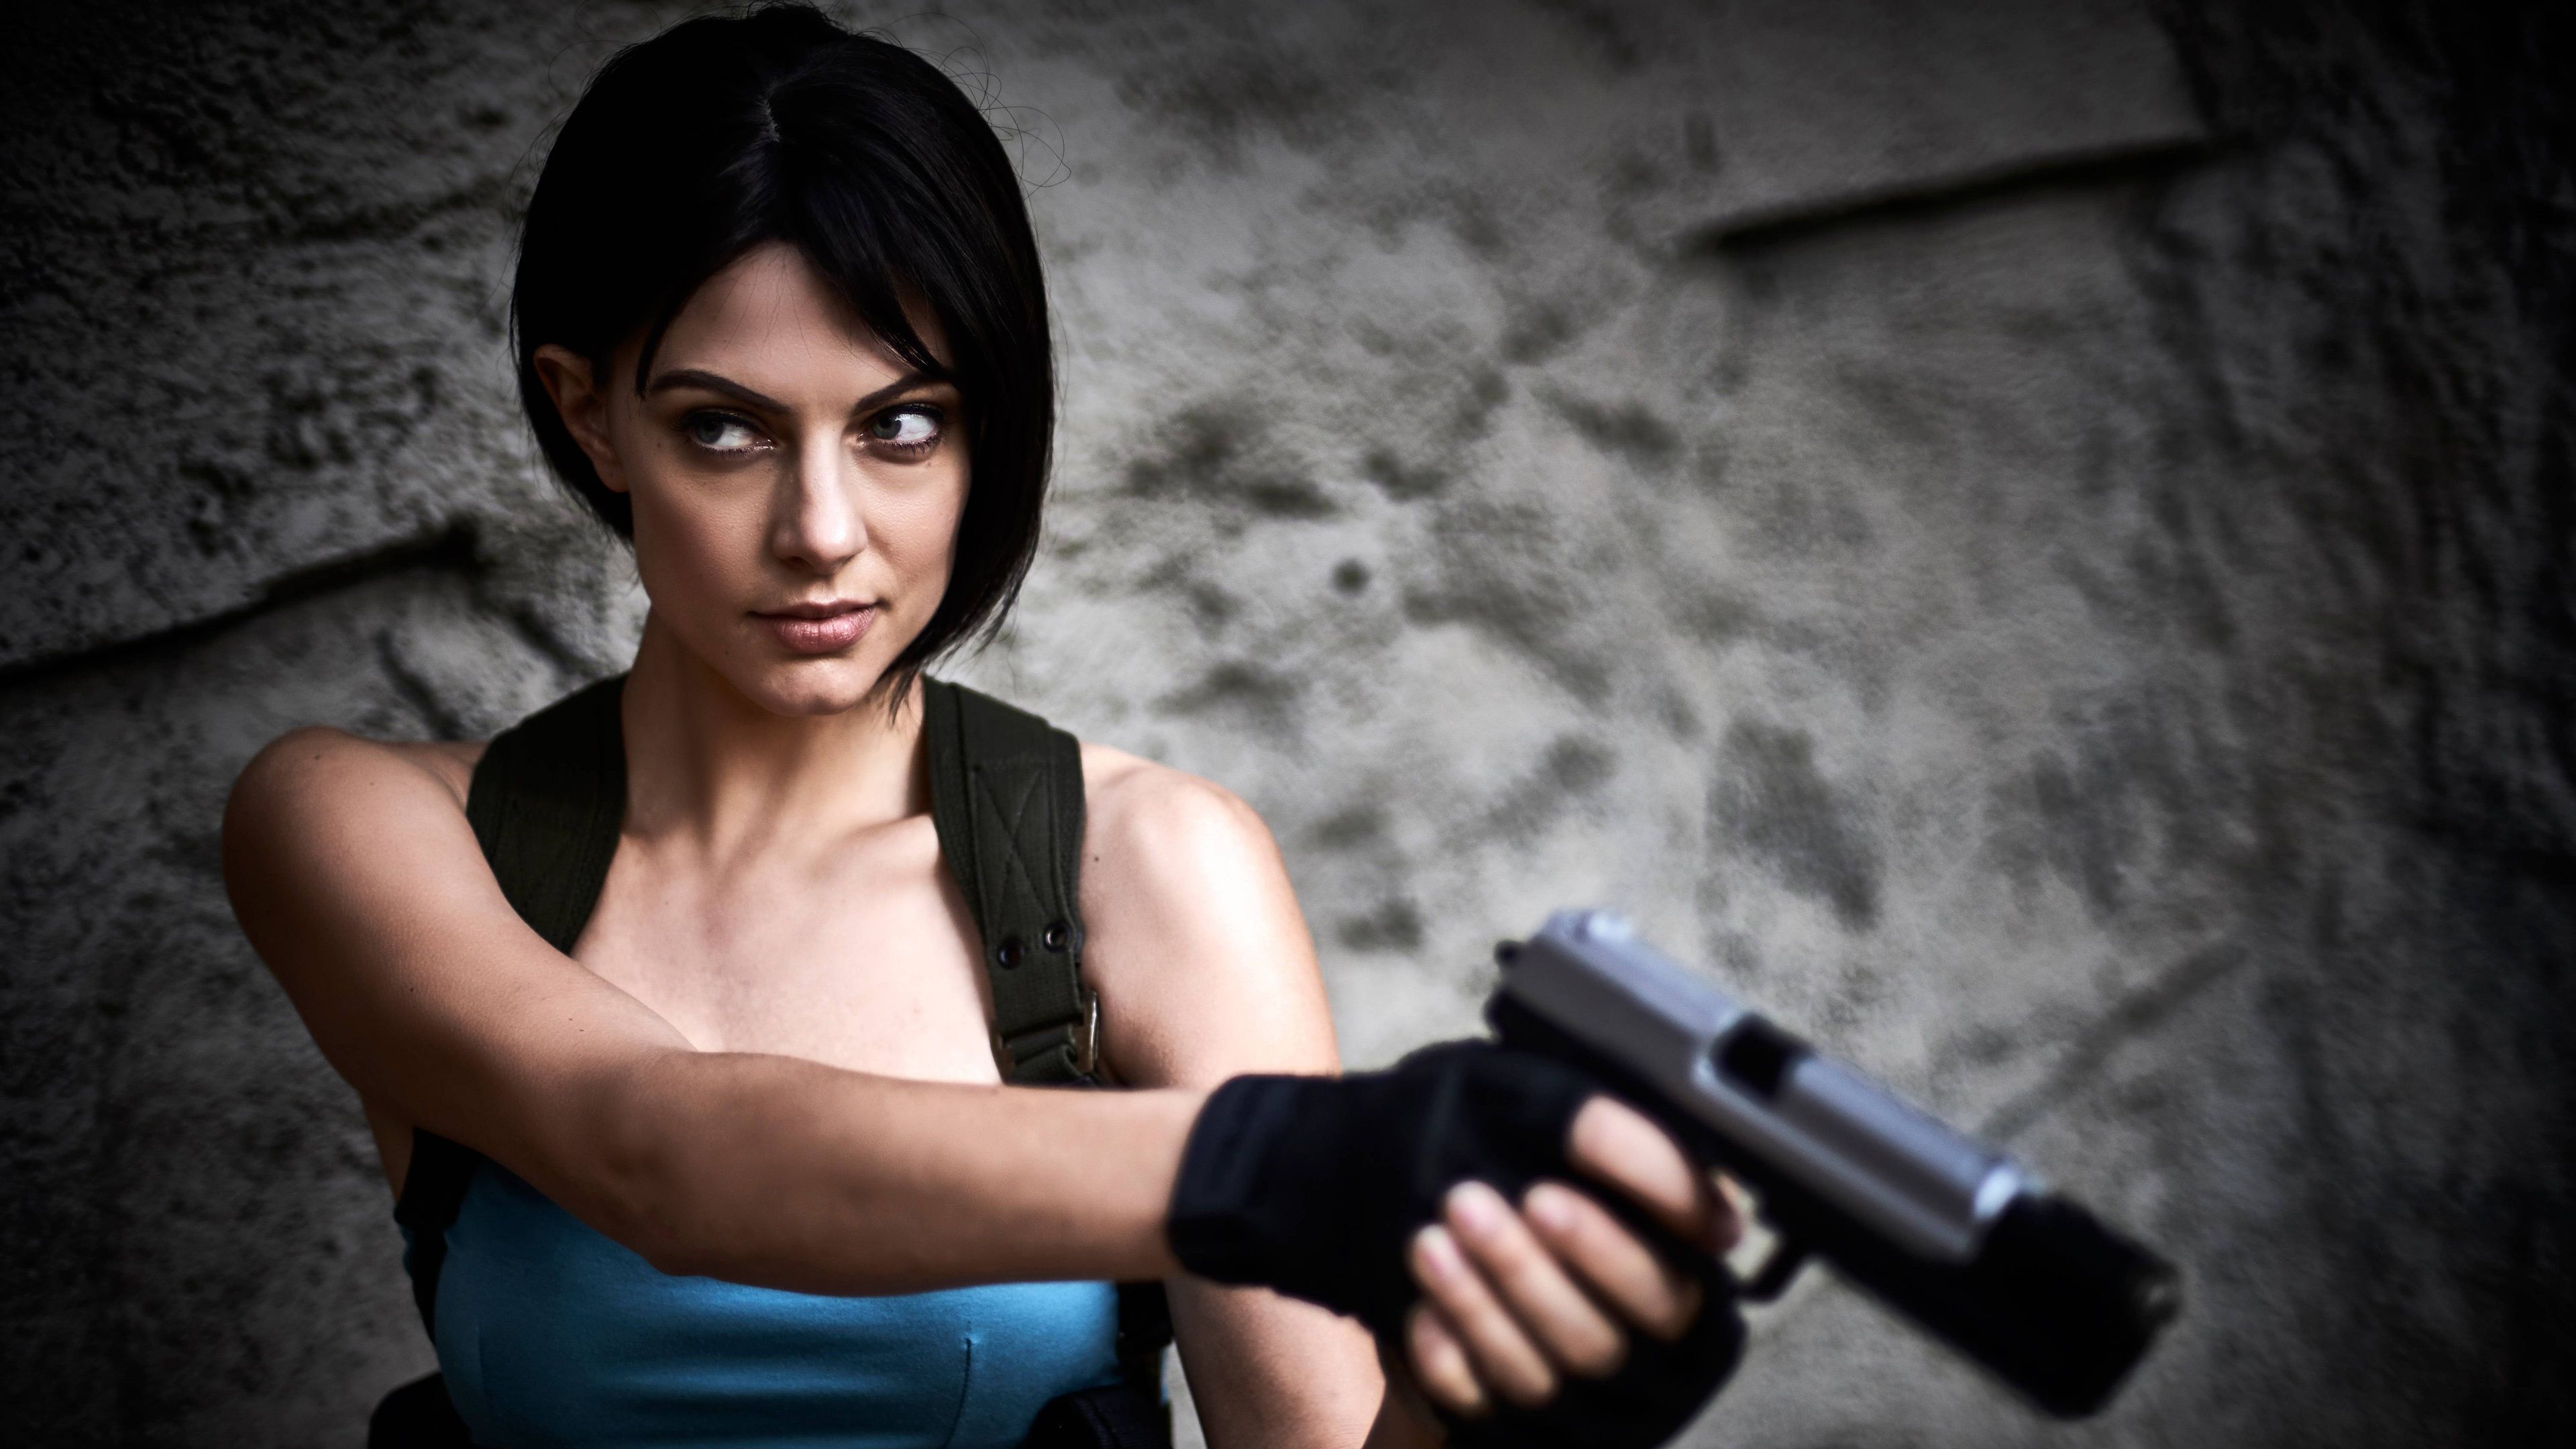 Wallpaper Resident Evil, cosplay, girl, gun 3840x2160 UHD 4K Picture, Image